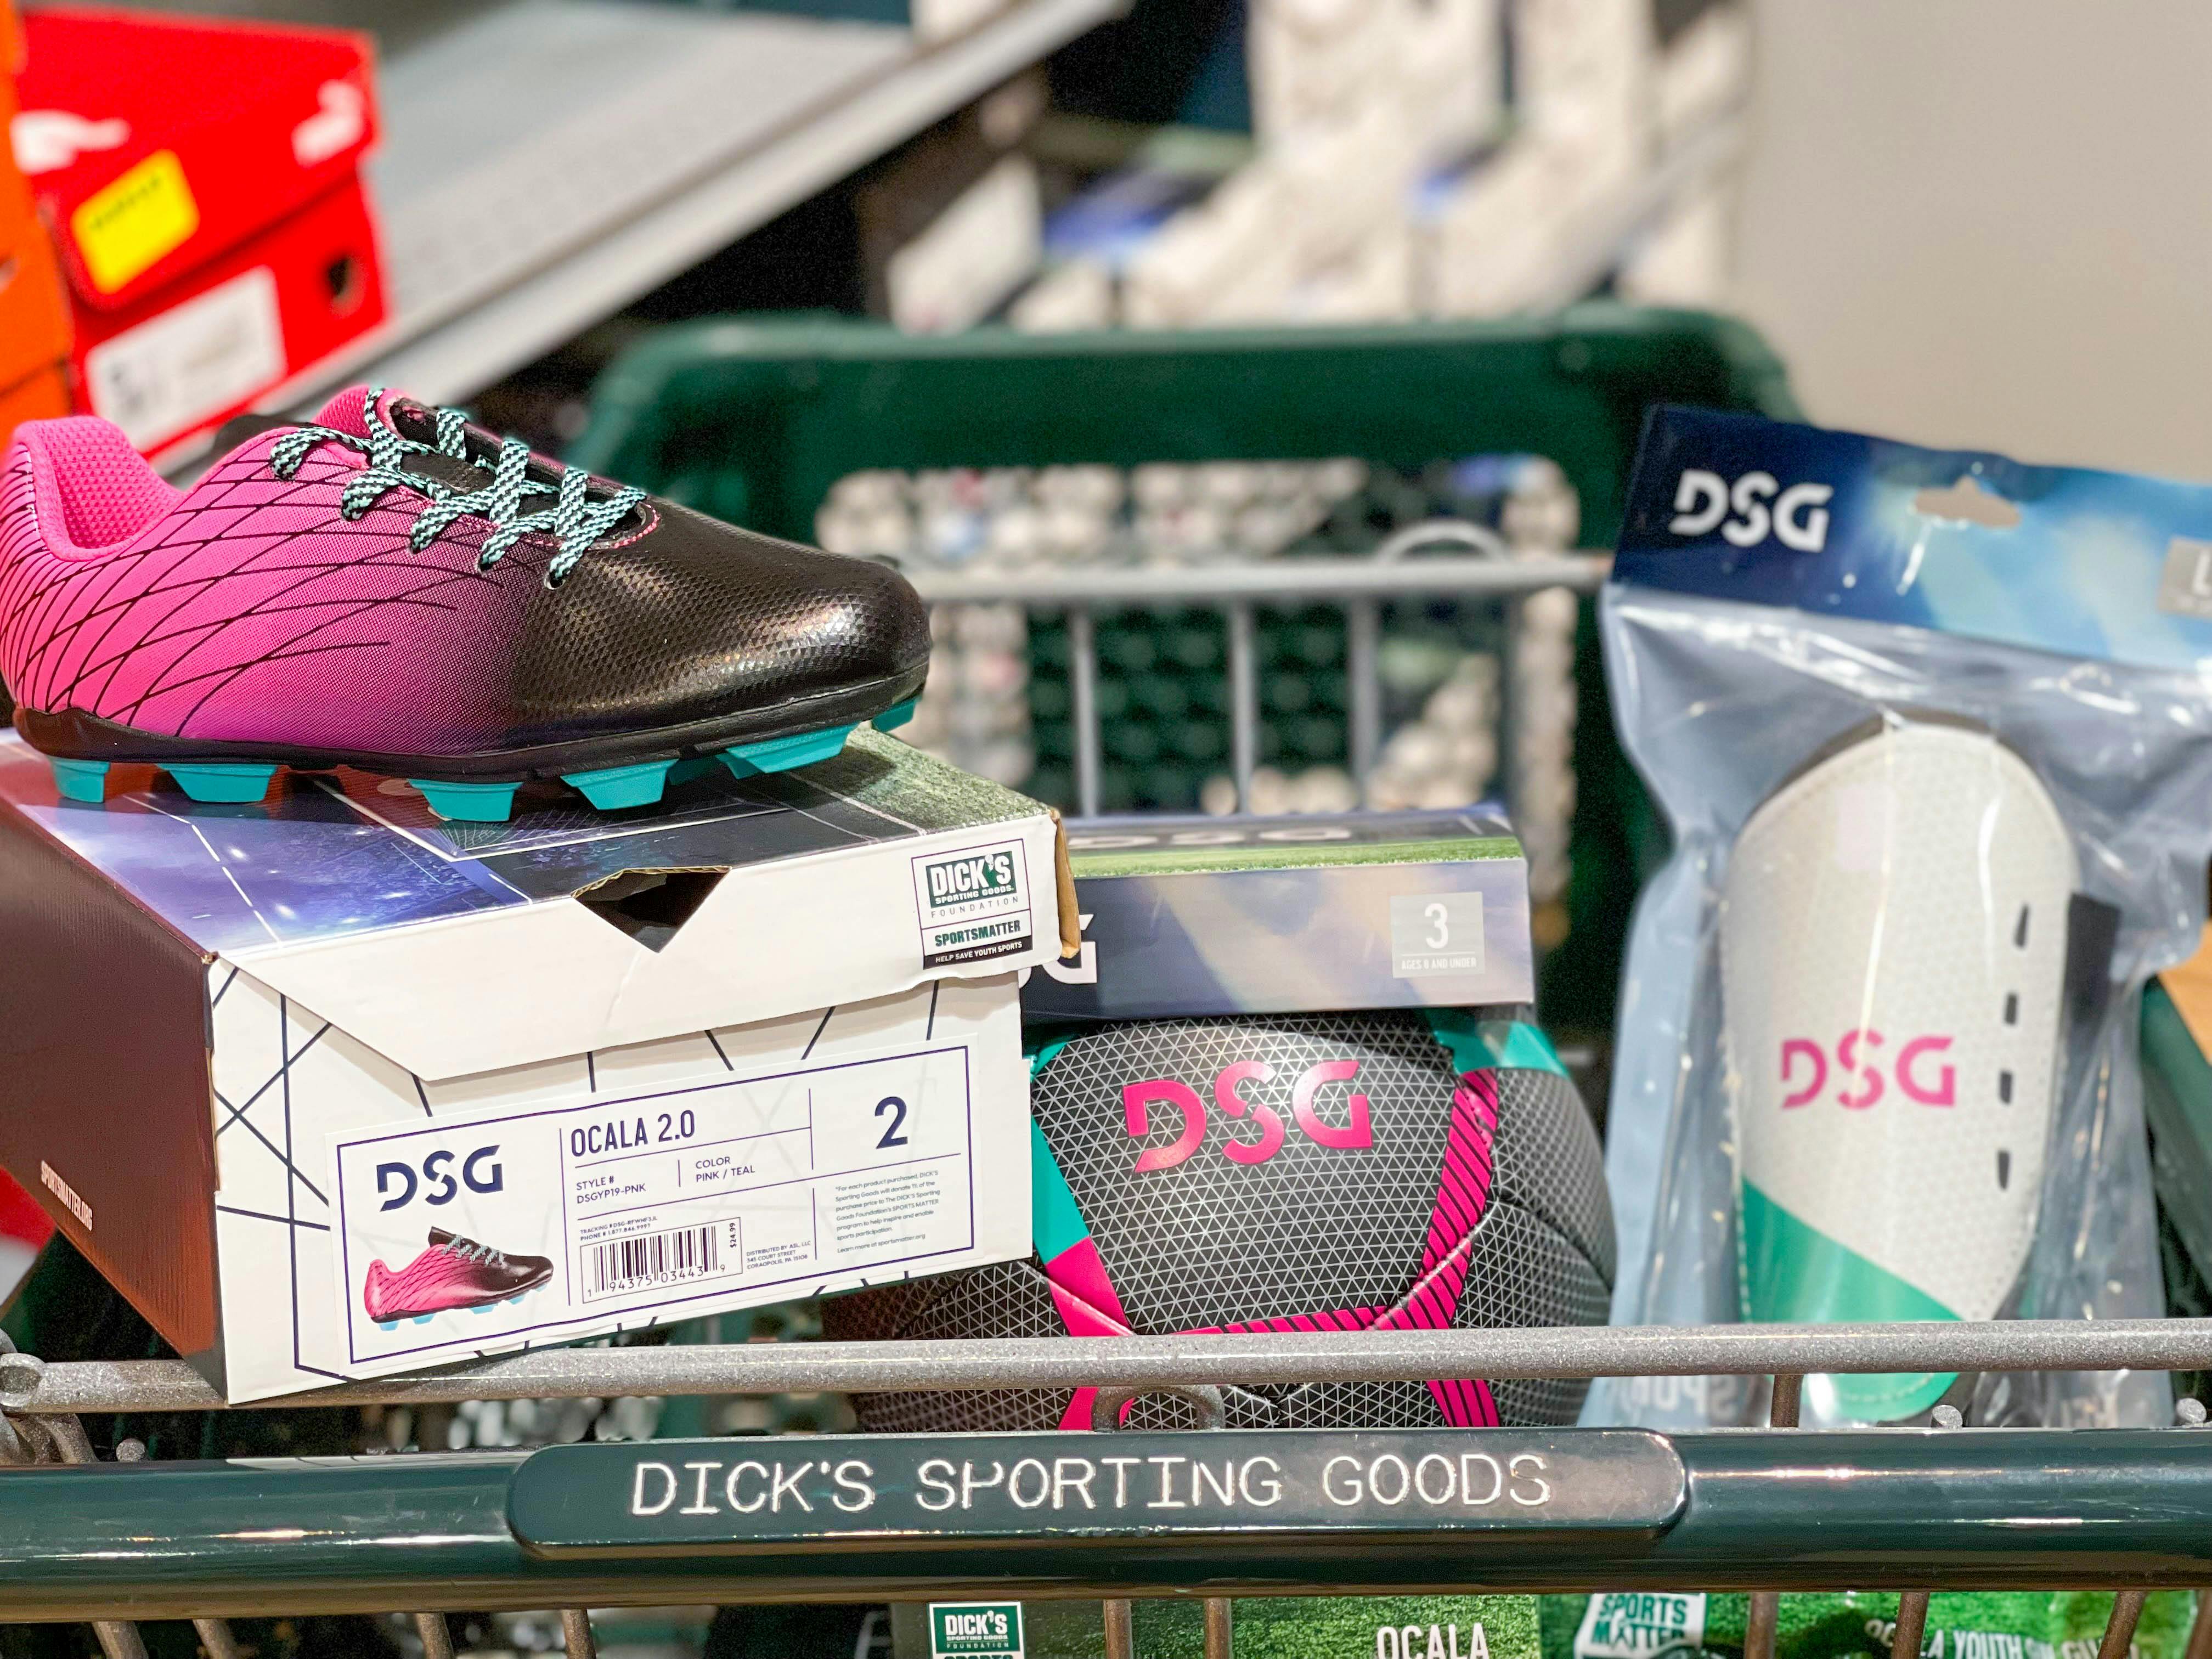 Girls soccer gear in a dicks sporting goods shopping basket